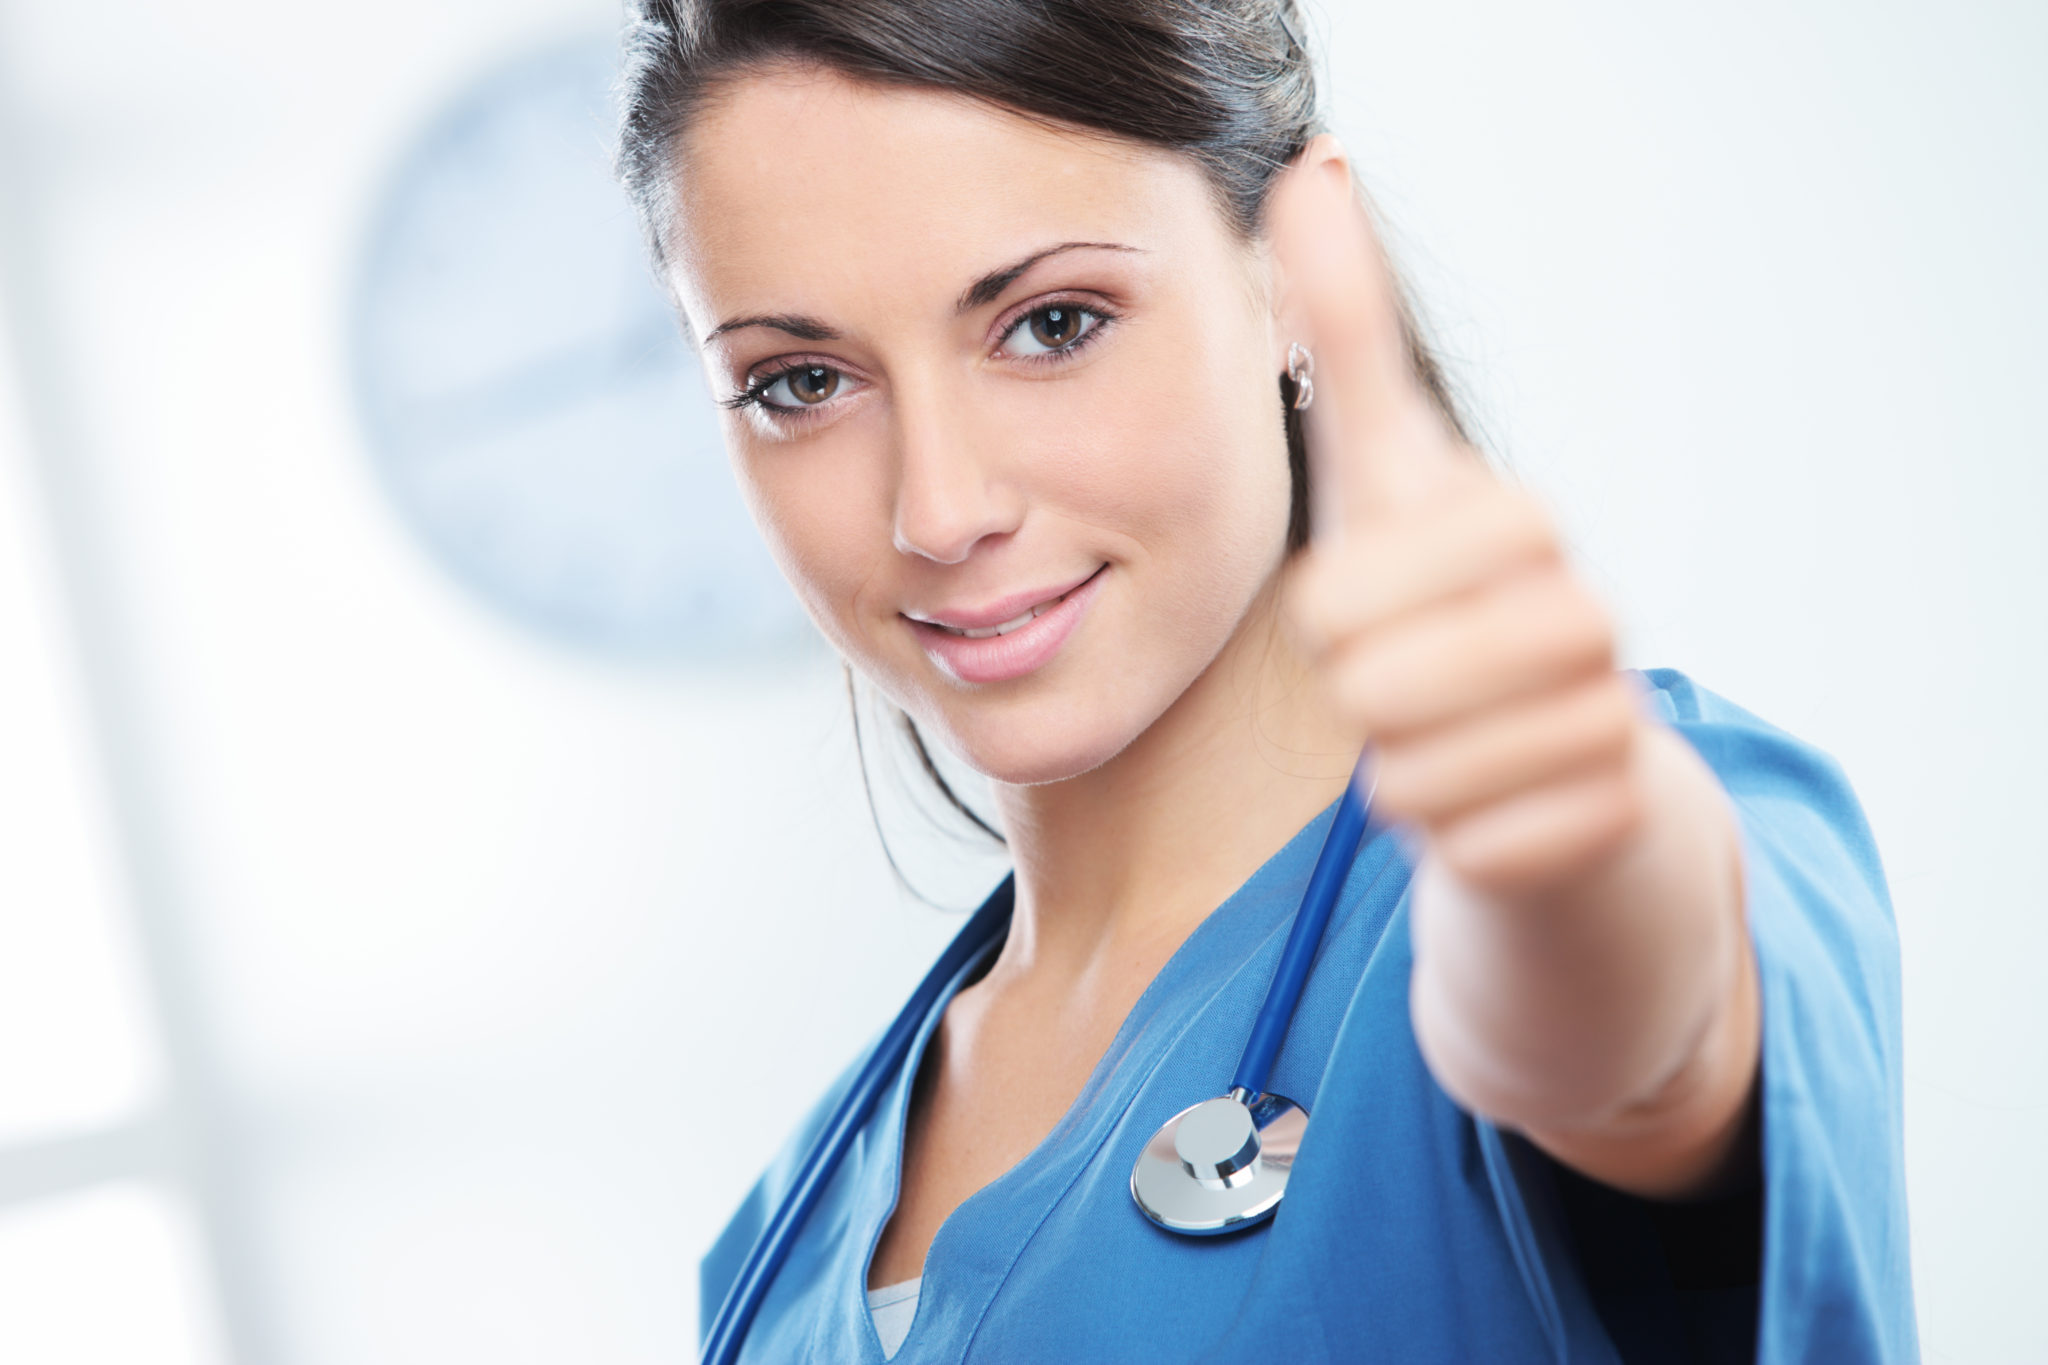 nursing career advice makes nurse happy